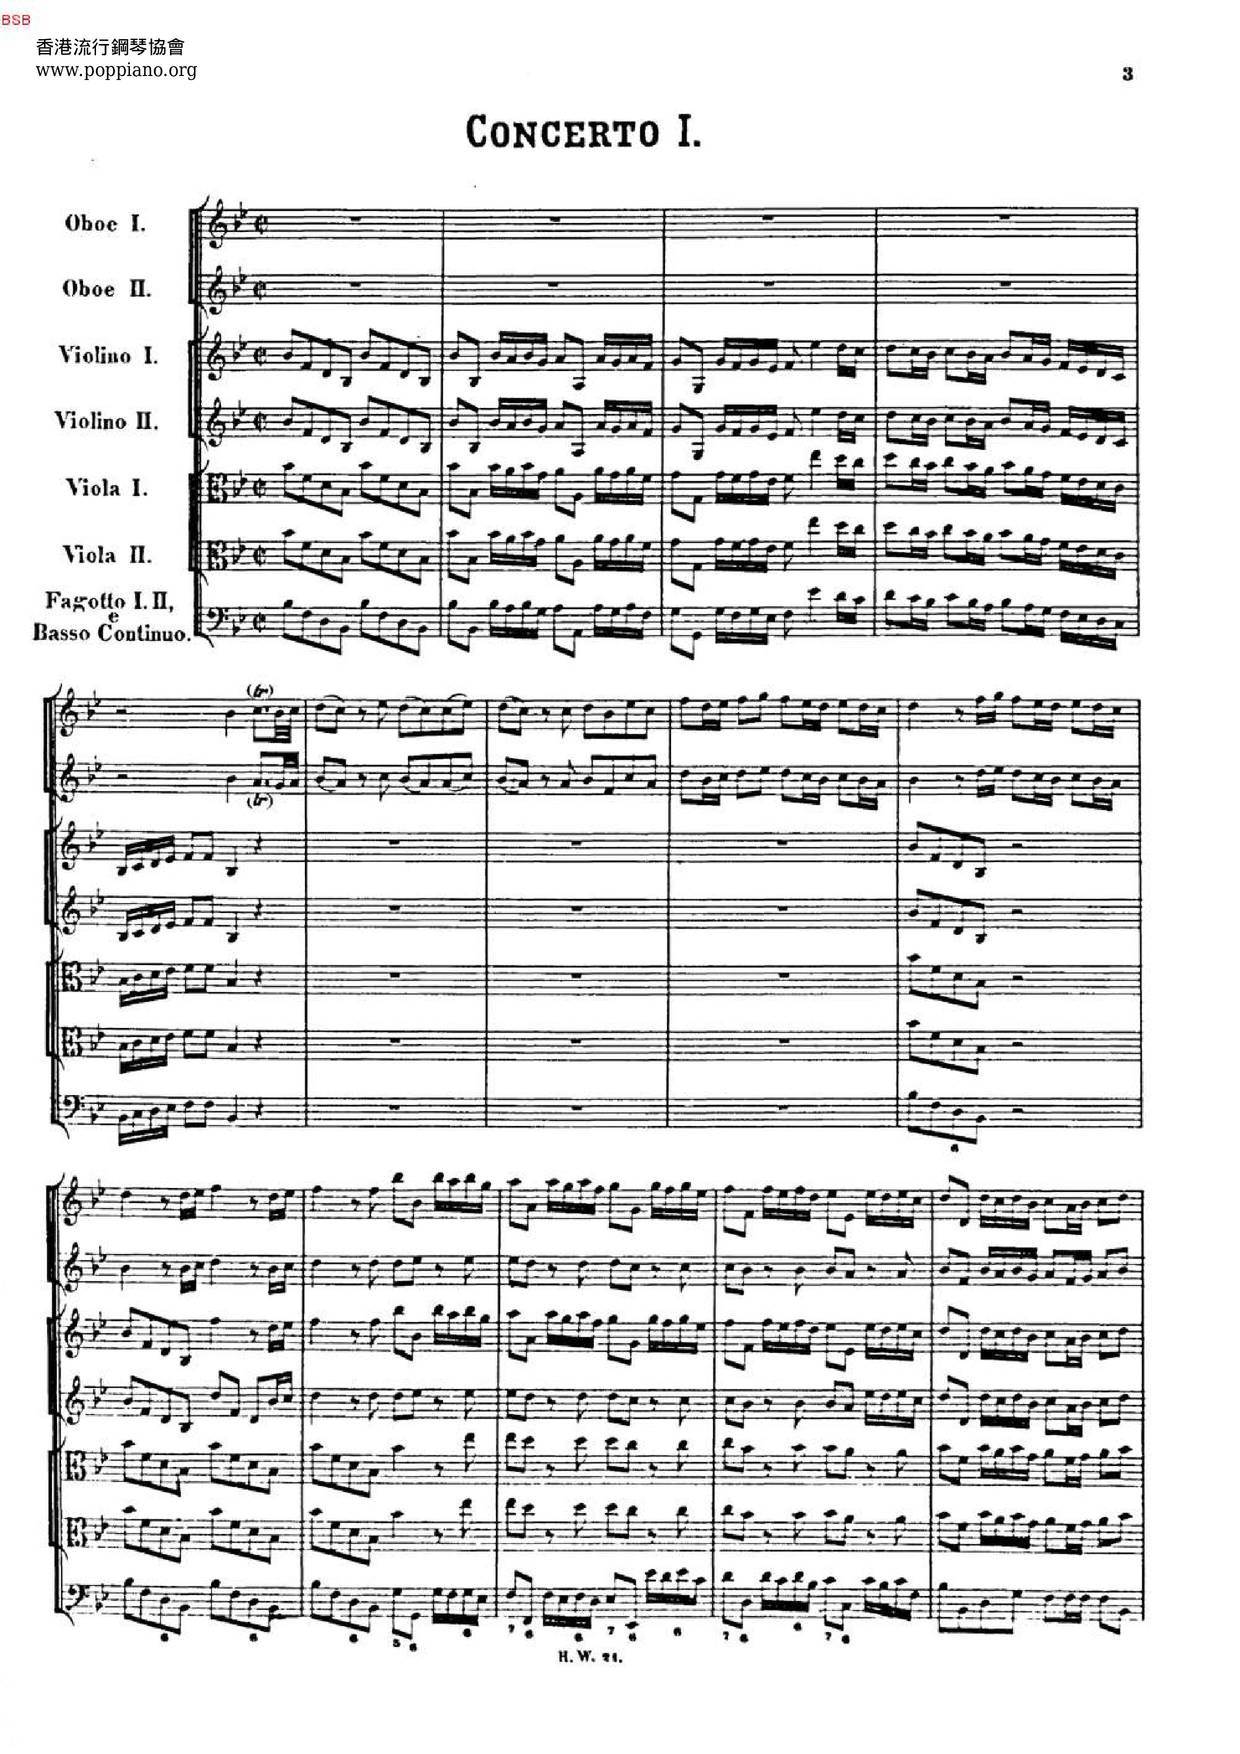 6 Concerti Grossi, Op. 3 Score